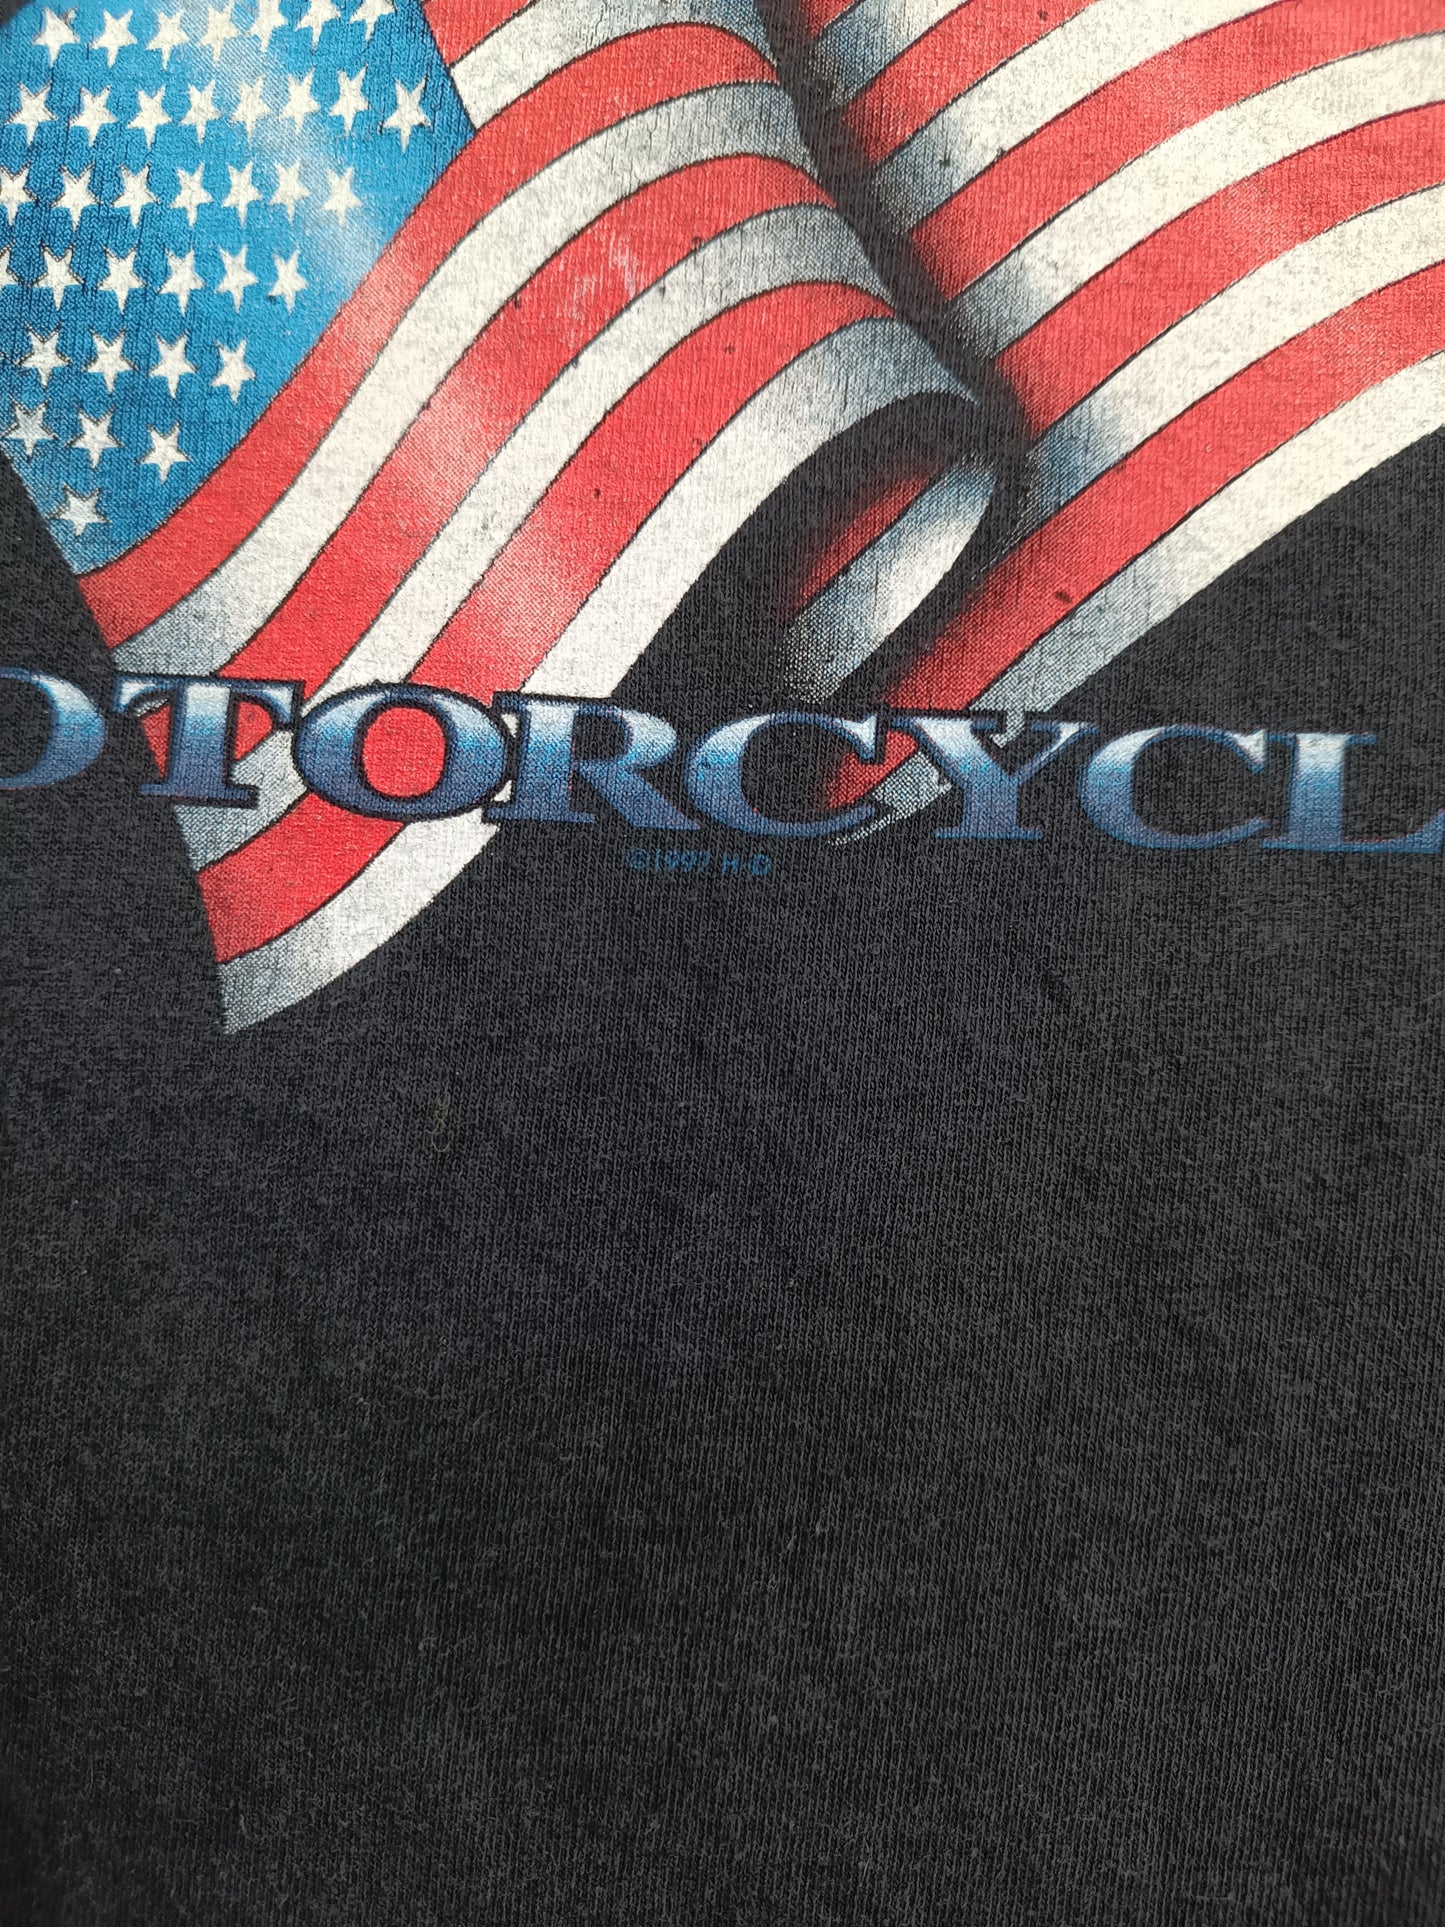 1990s Harley Davidson Motorcycles - L